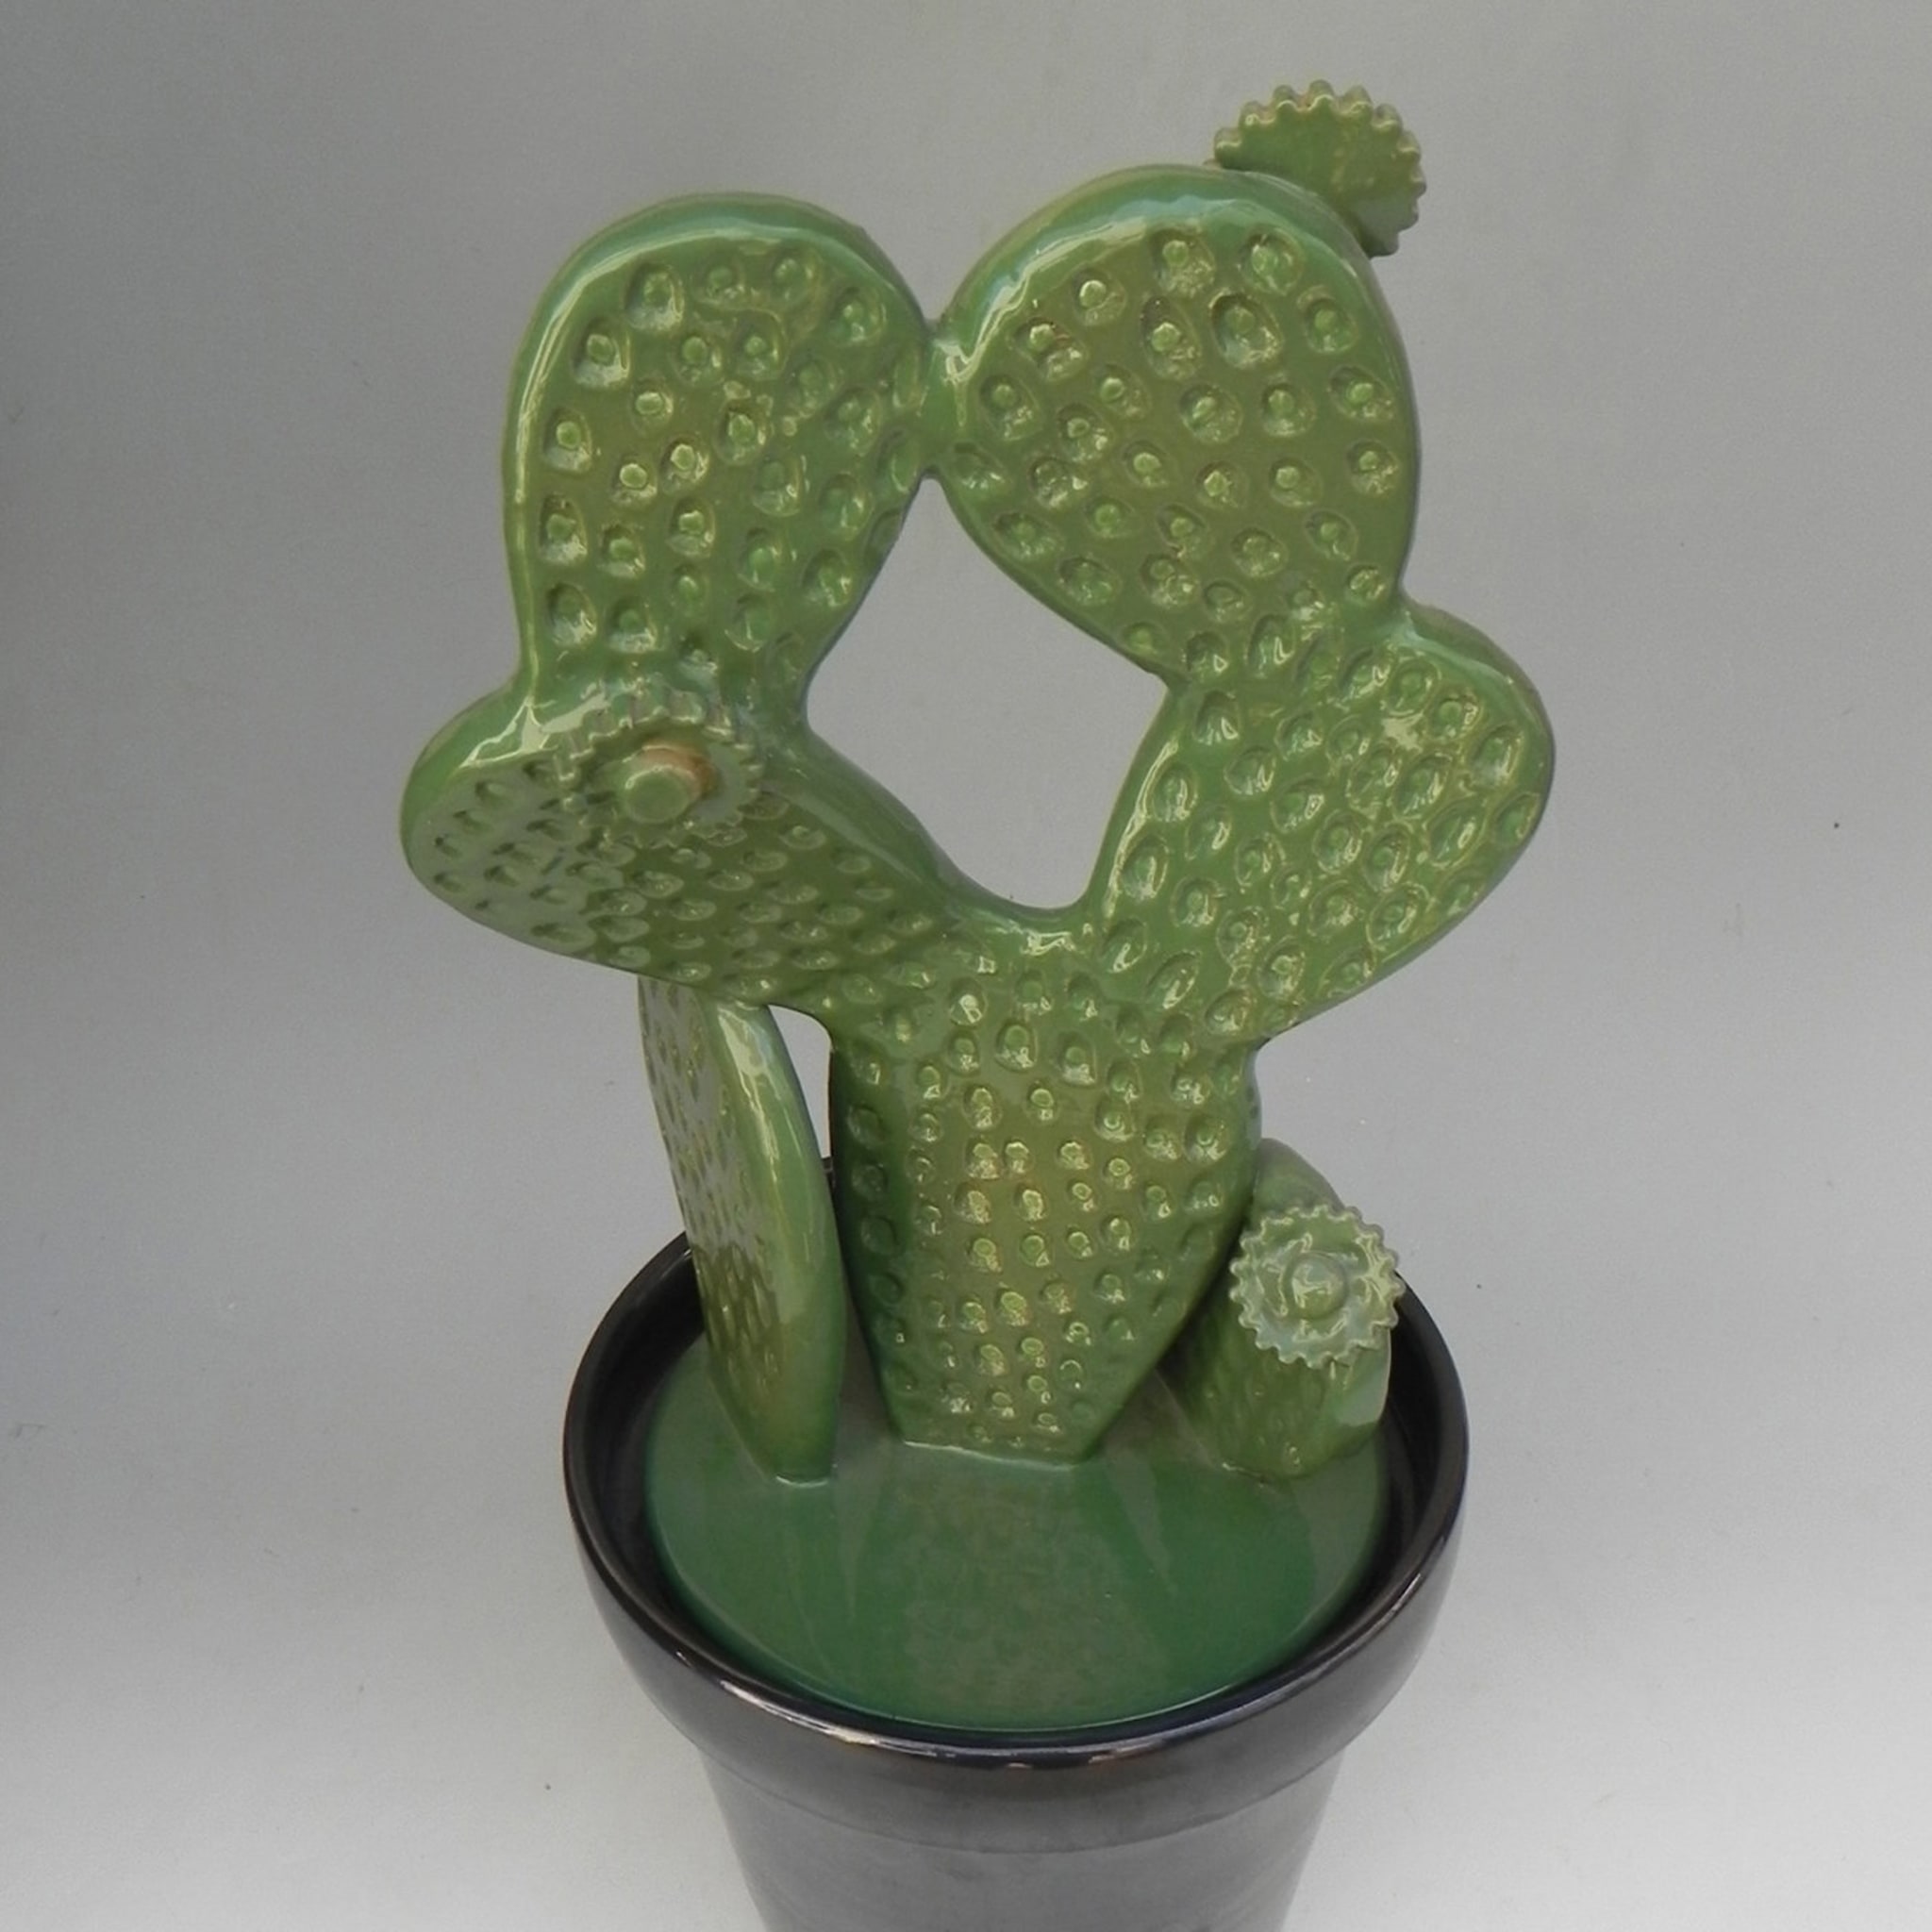 Gutierrez Street Ceramic Cactus Sculpture by Tullio Mazzotti - Alternative view 4